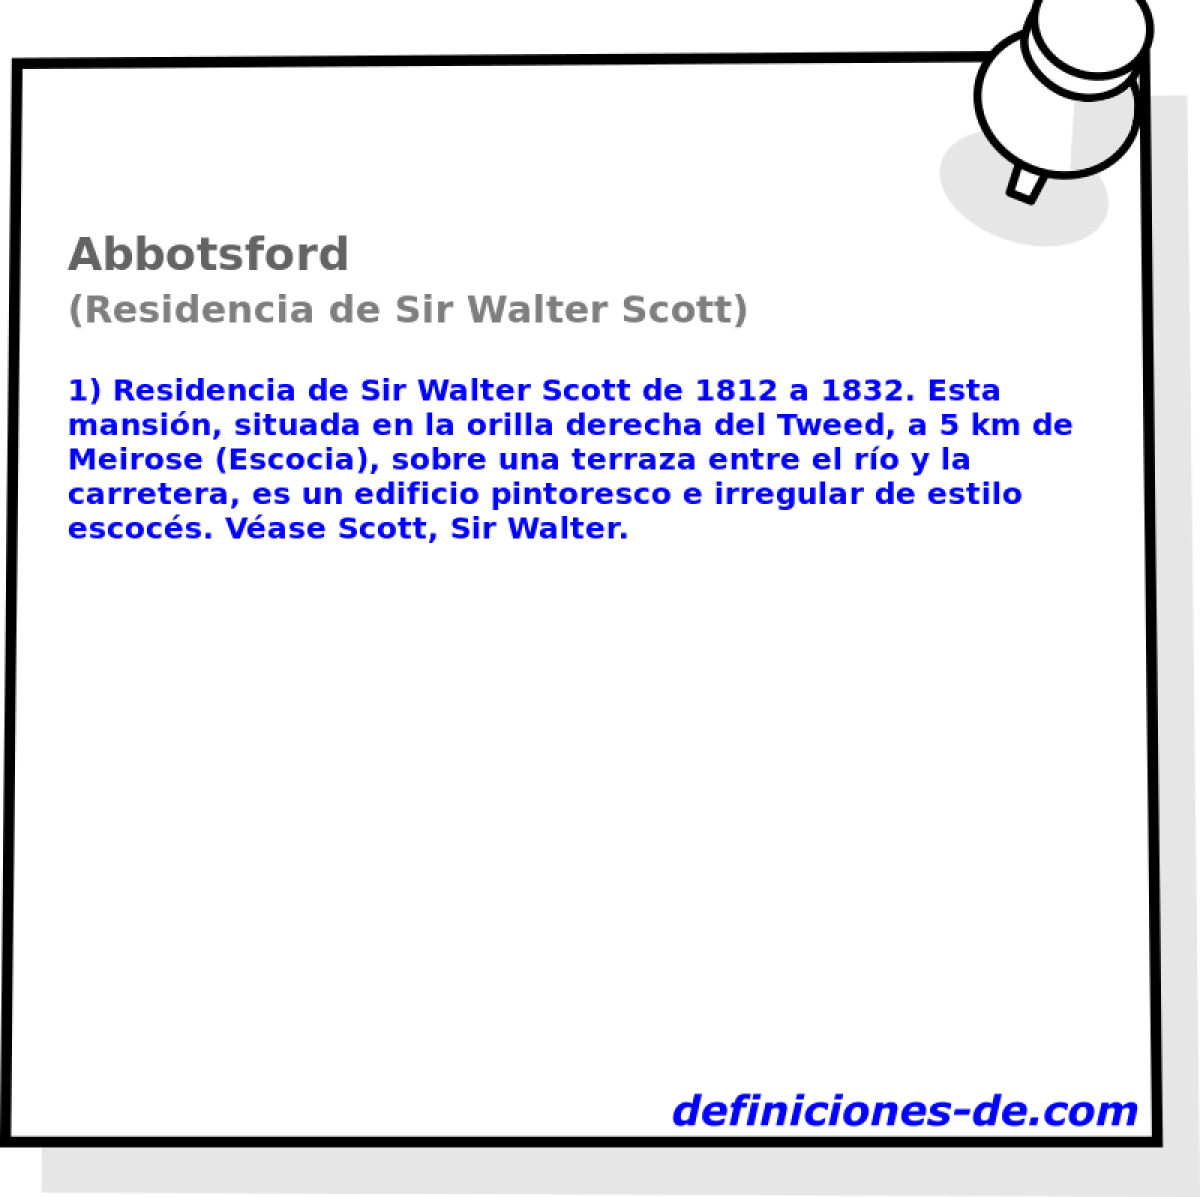 Abbotsford (Residencia de Sir Walter Scott)